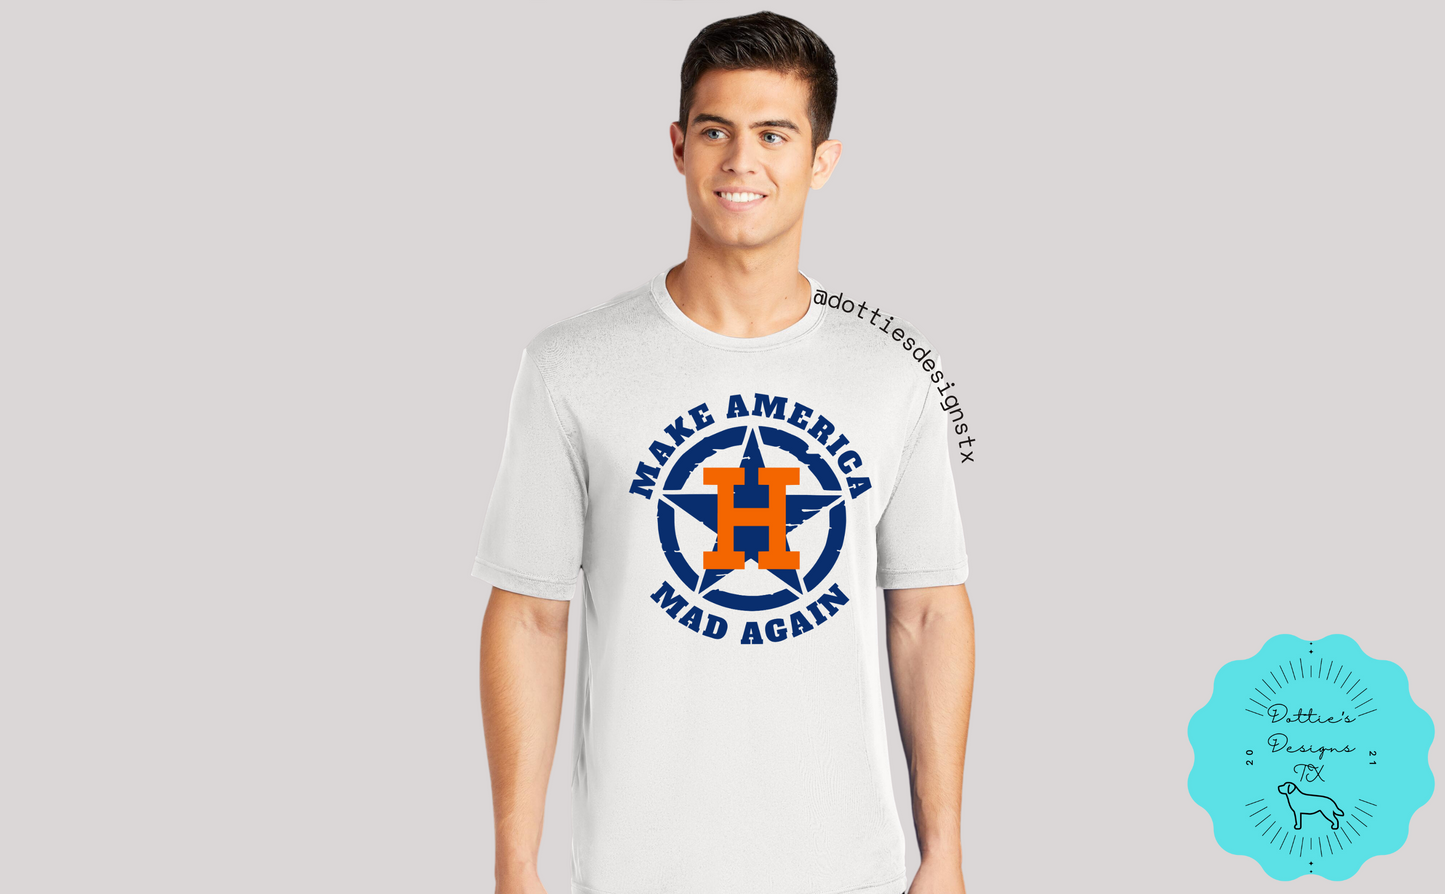 Astros Make America Mad Again Houston T-Shirt